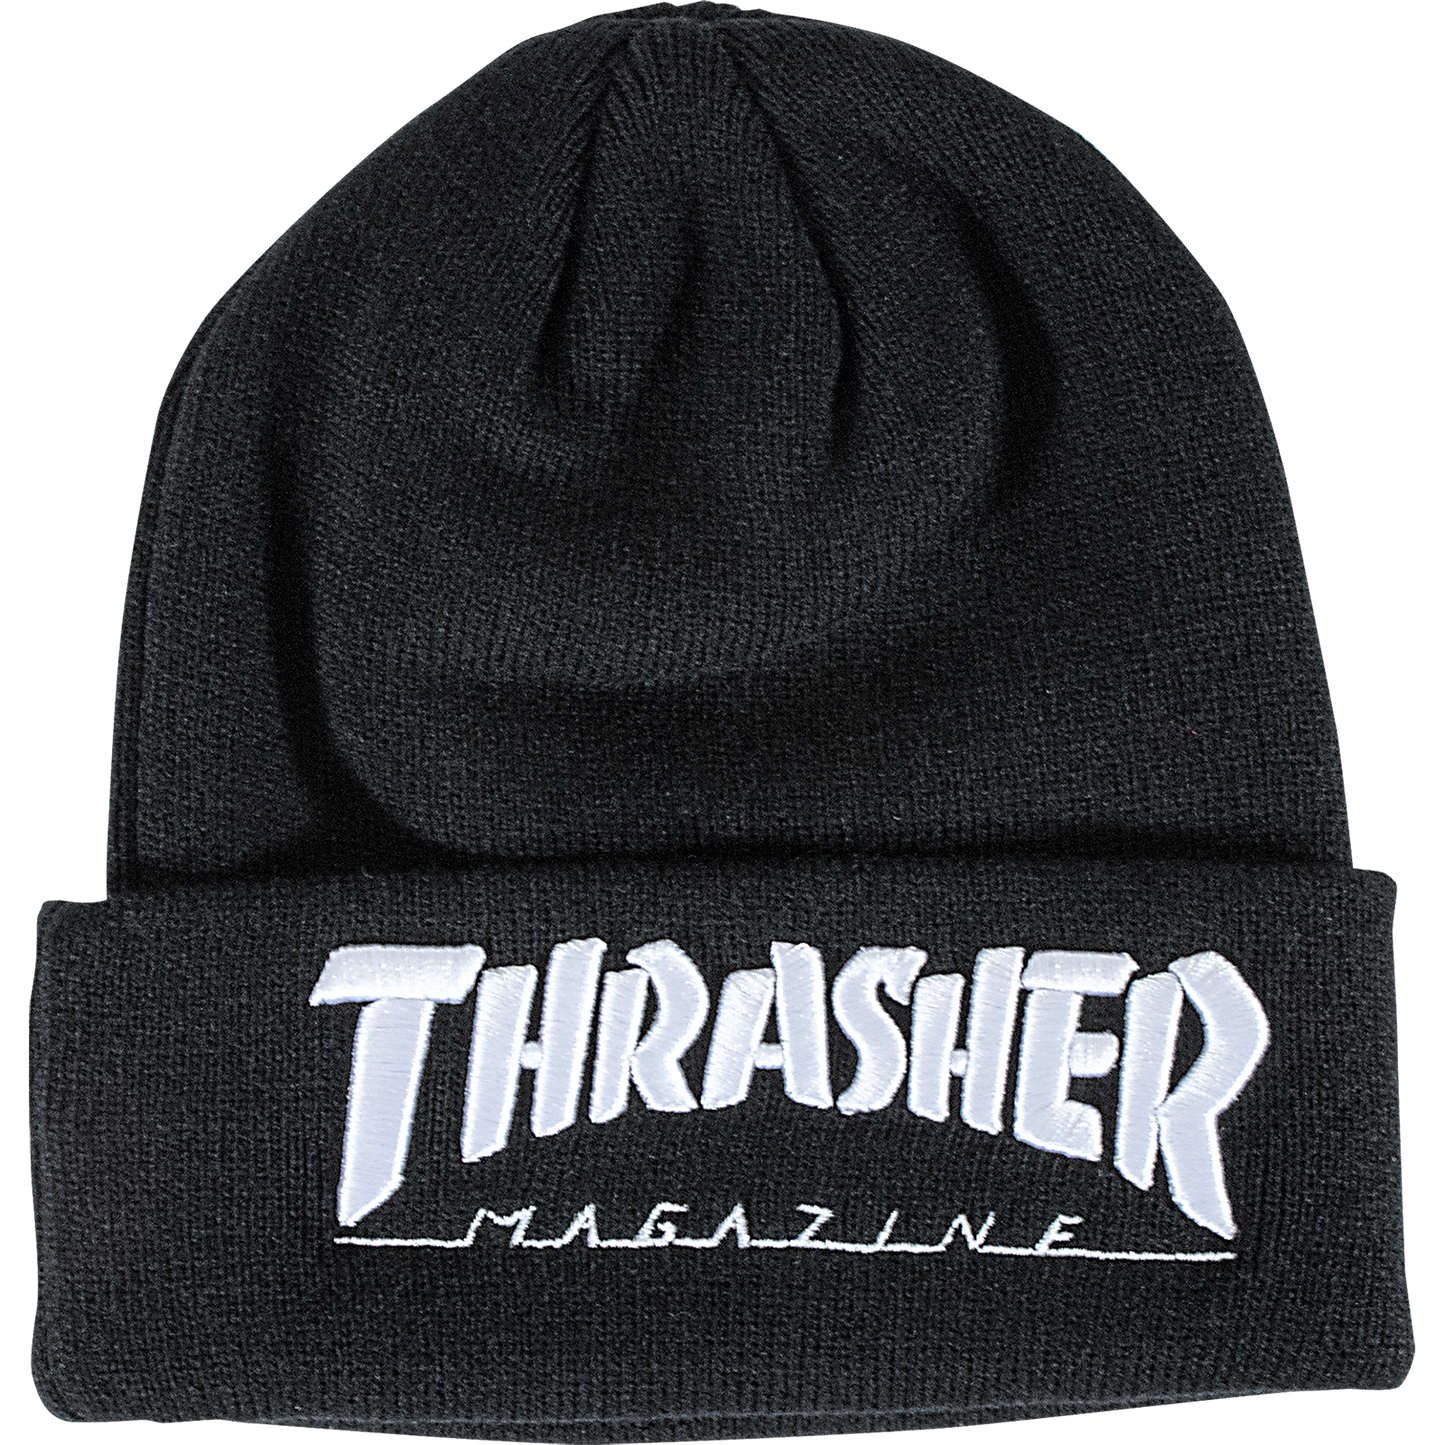 Thrasher Embroidered Logo Beanie Black/White